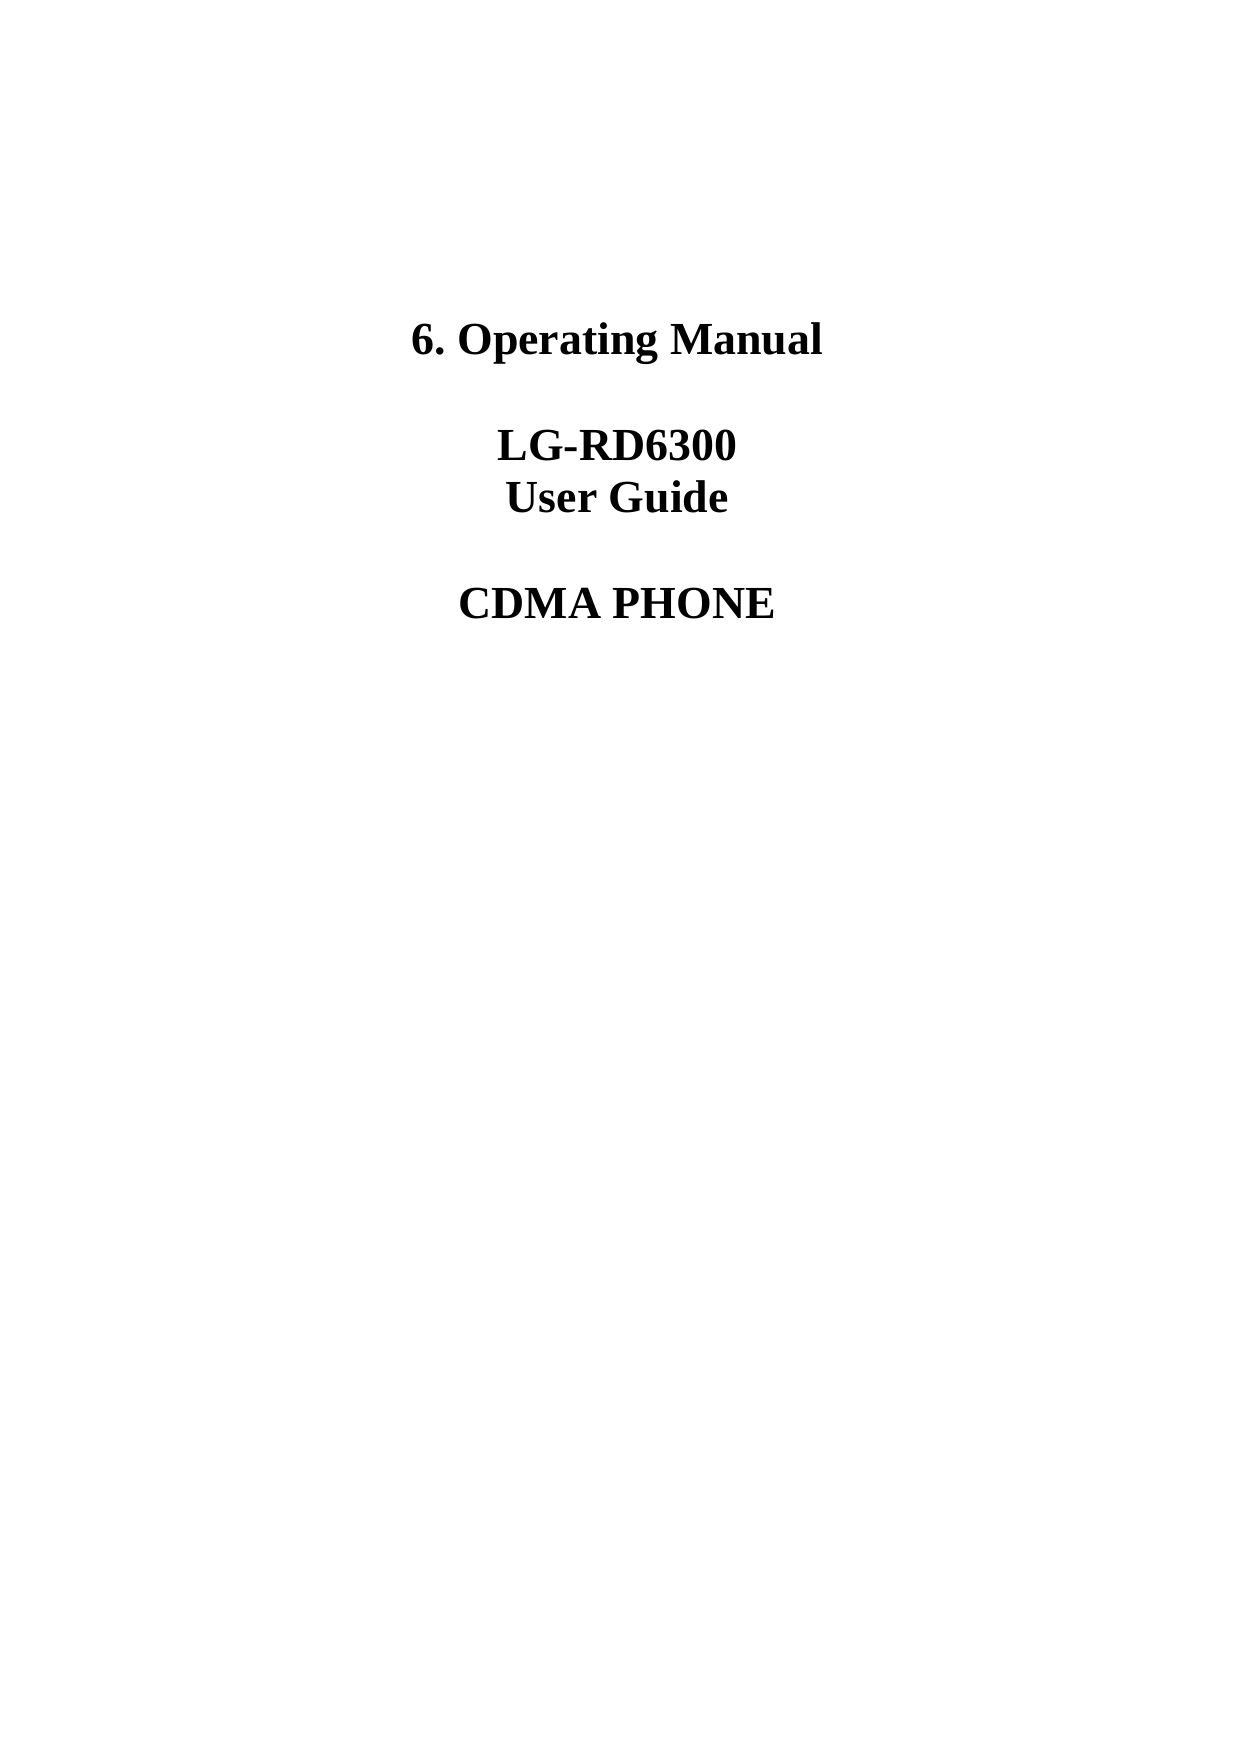   6. Operating Manual  LG-RD6300 User Guide  CDMA PHONE                          